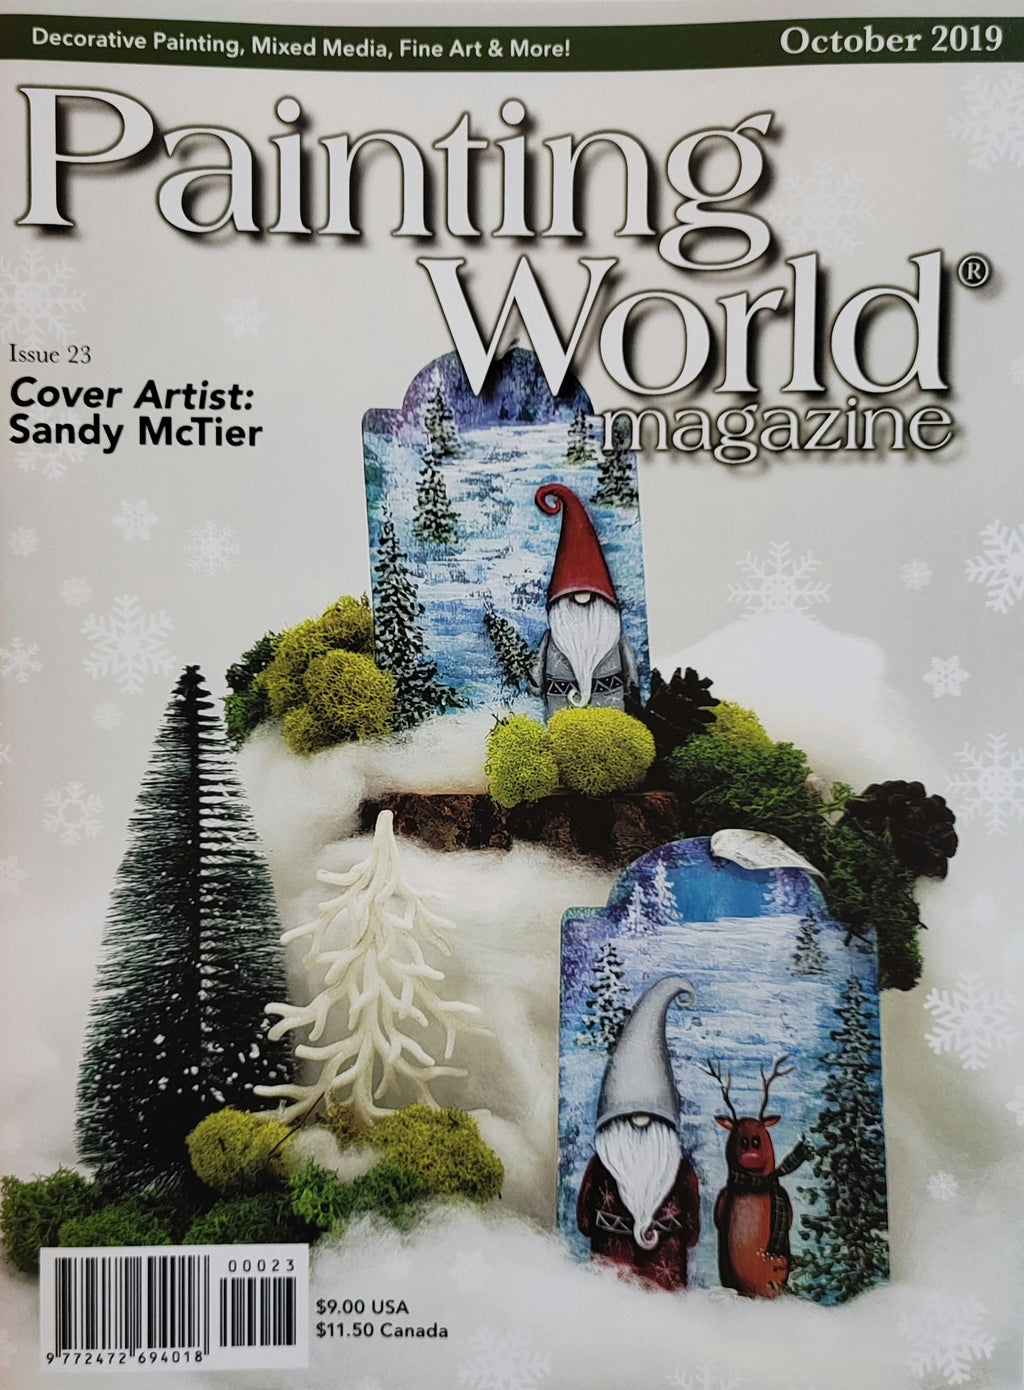 Painting World Magazine, Issue 23, October 2019